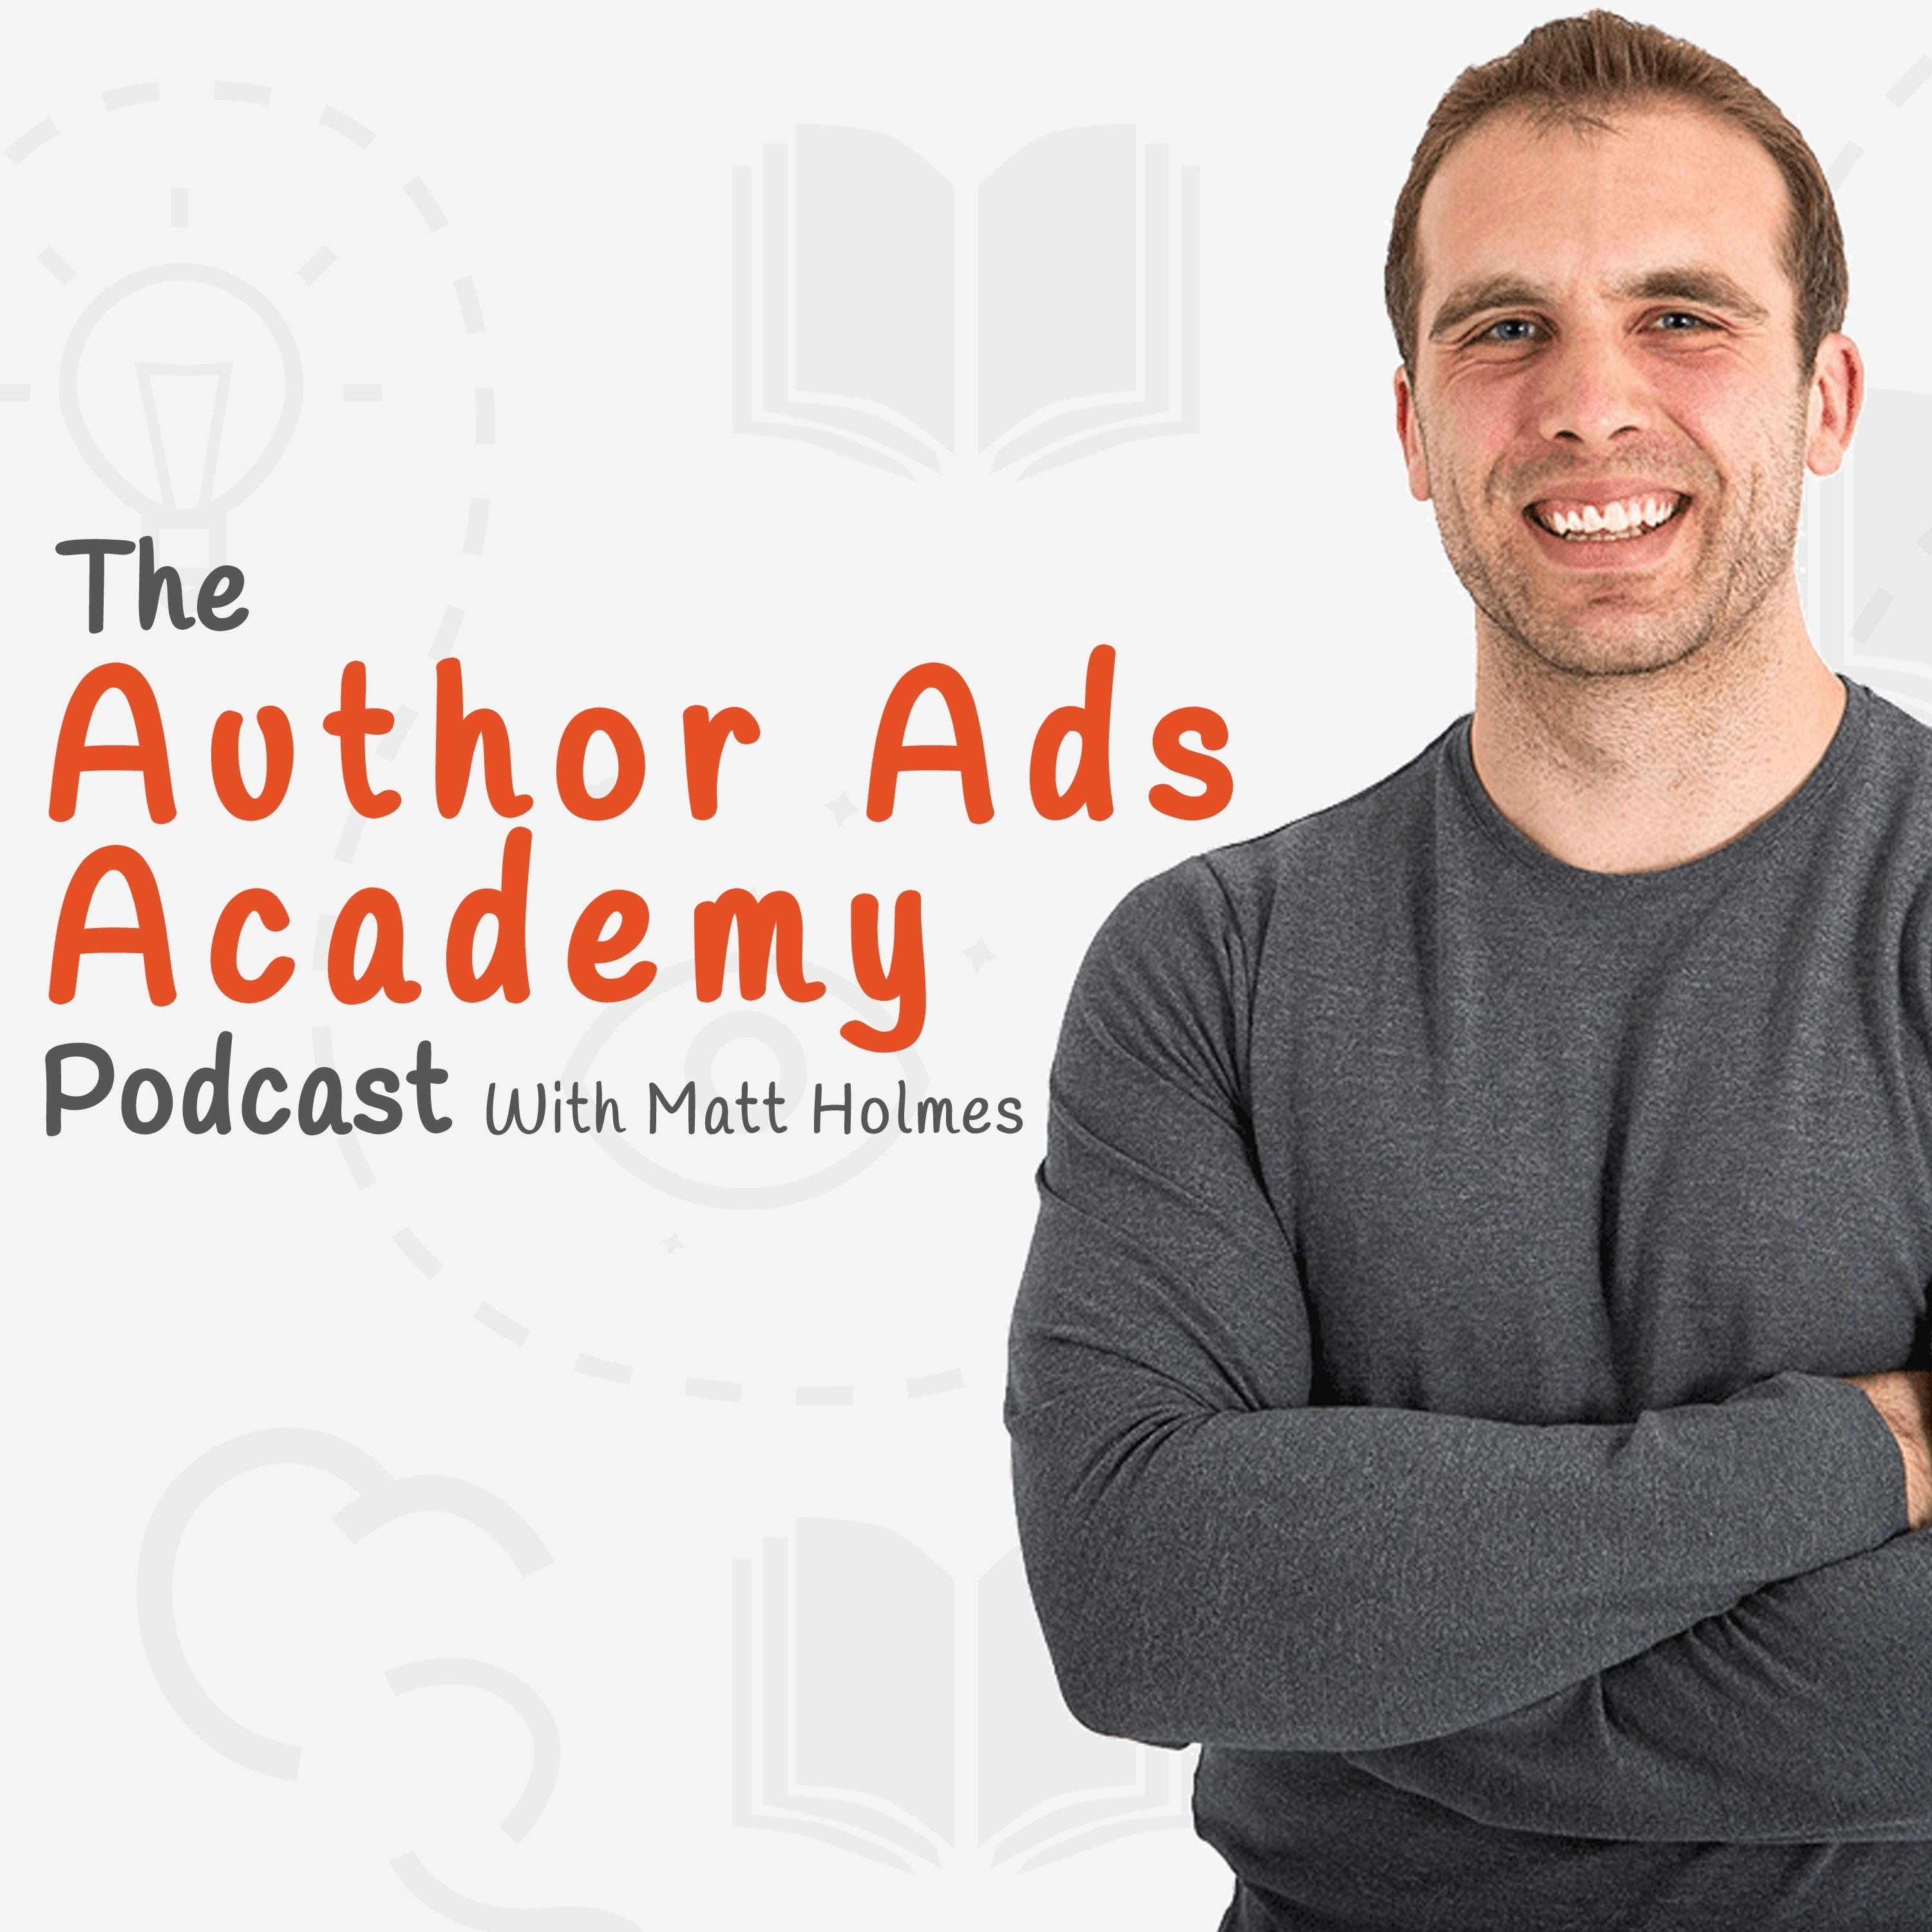 The Author Ads Academy Podcast